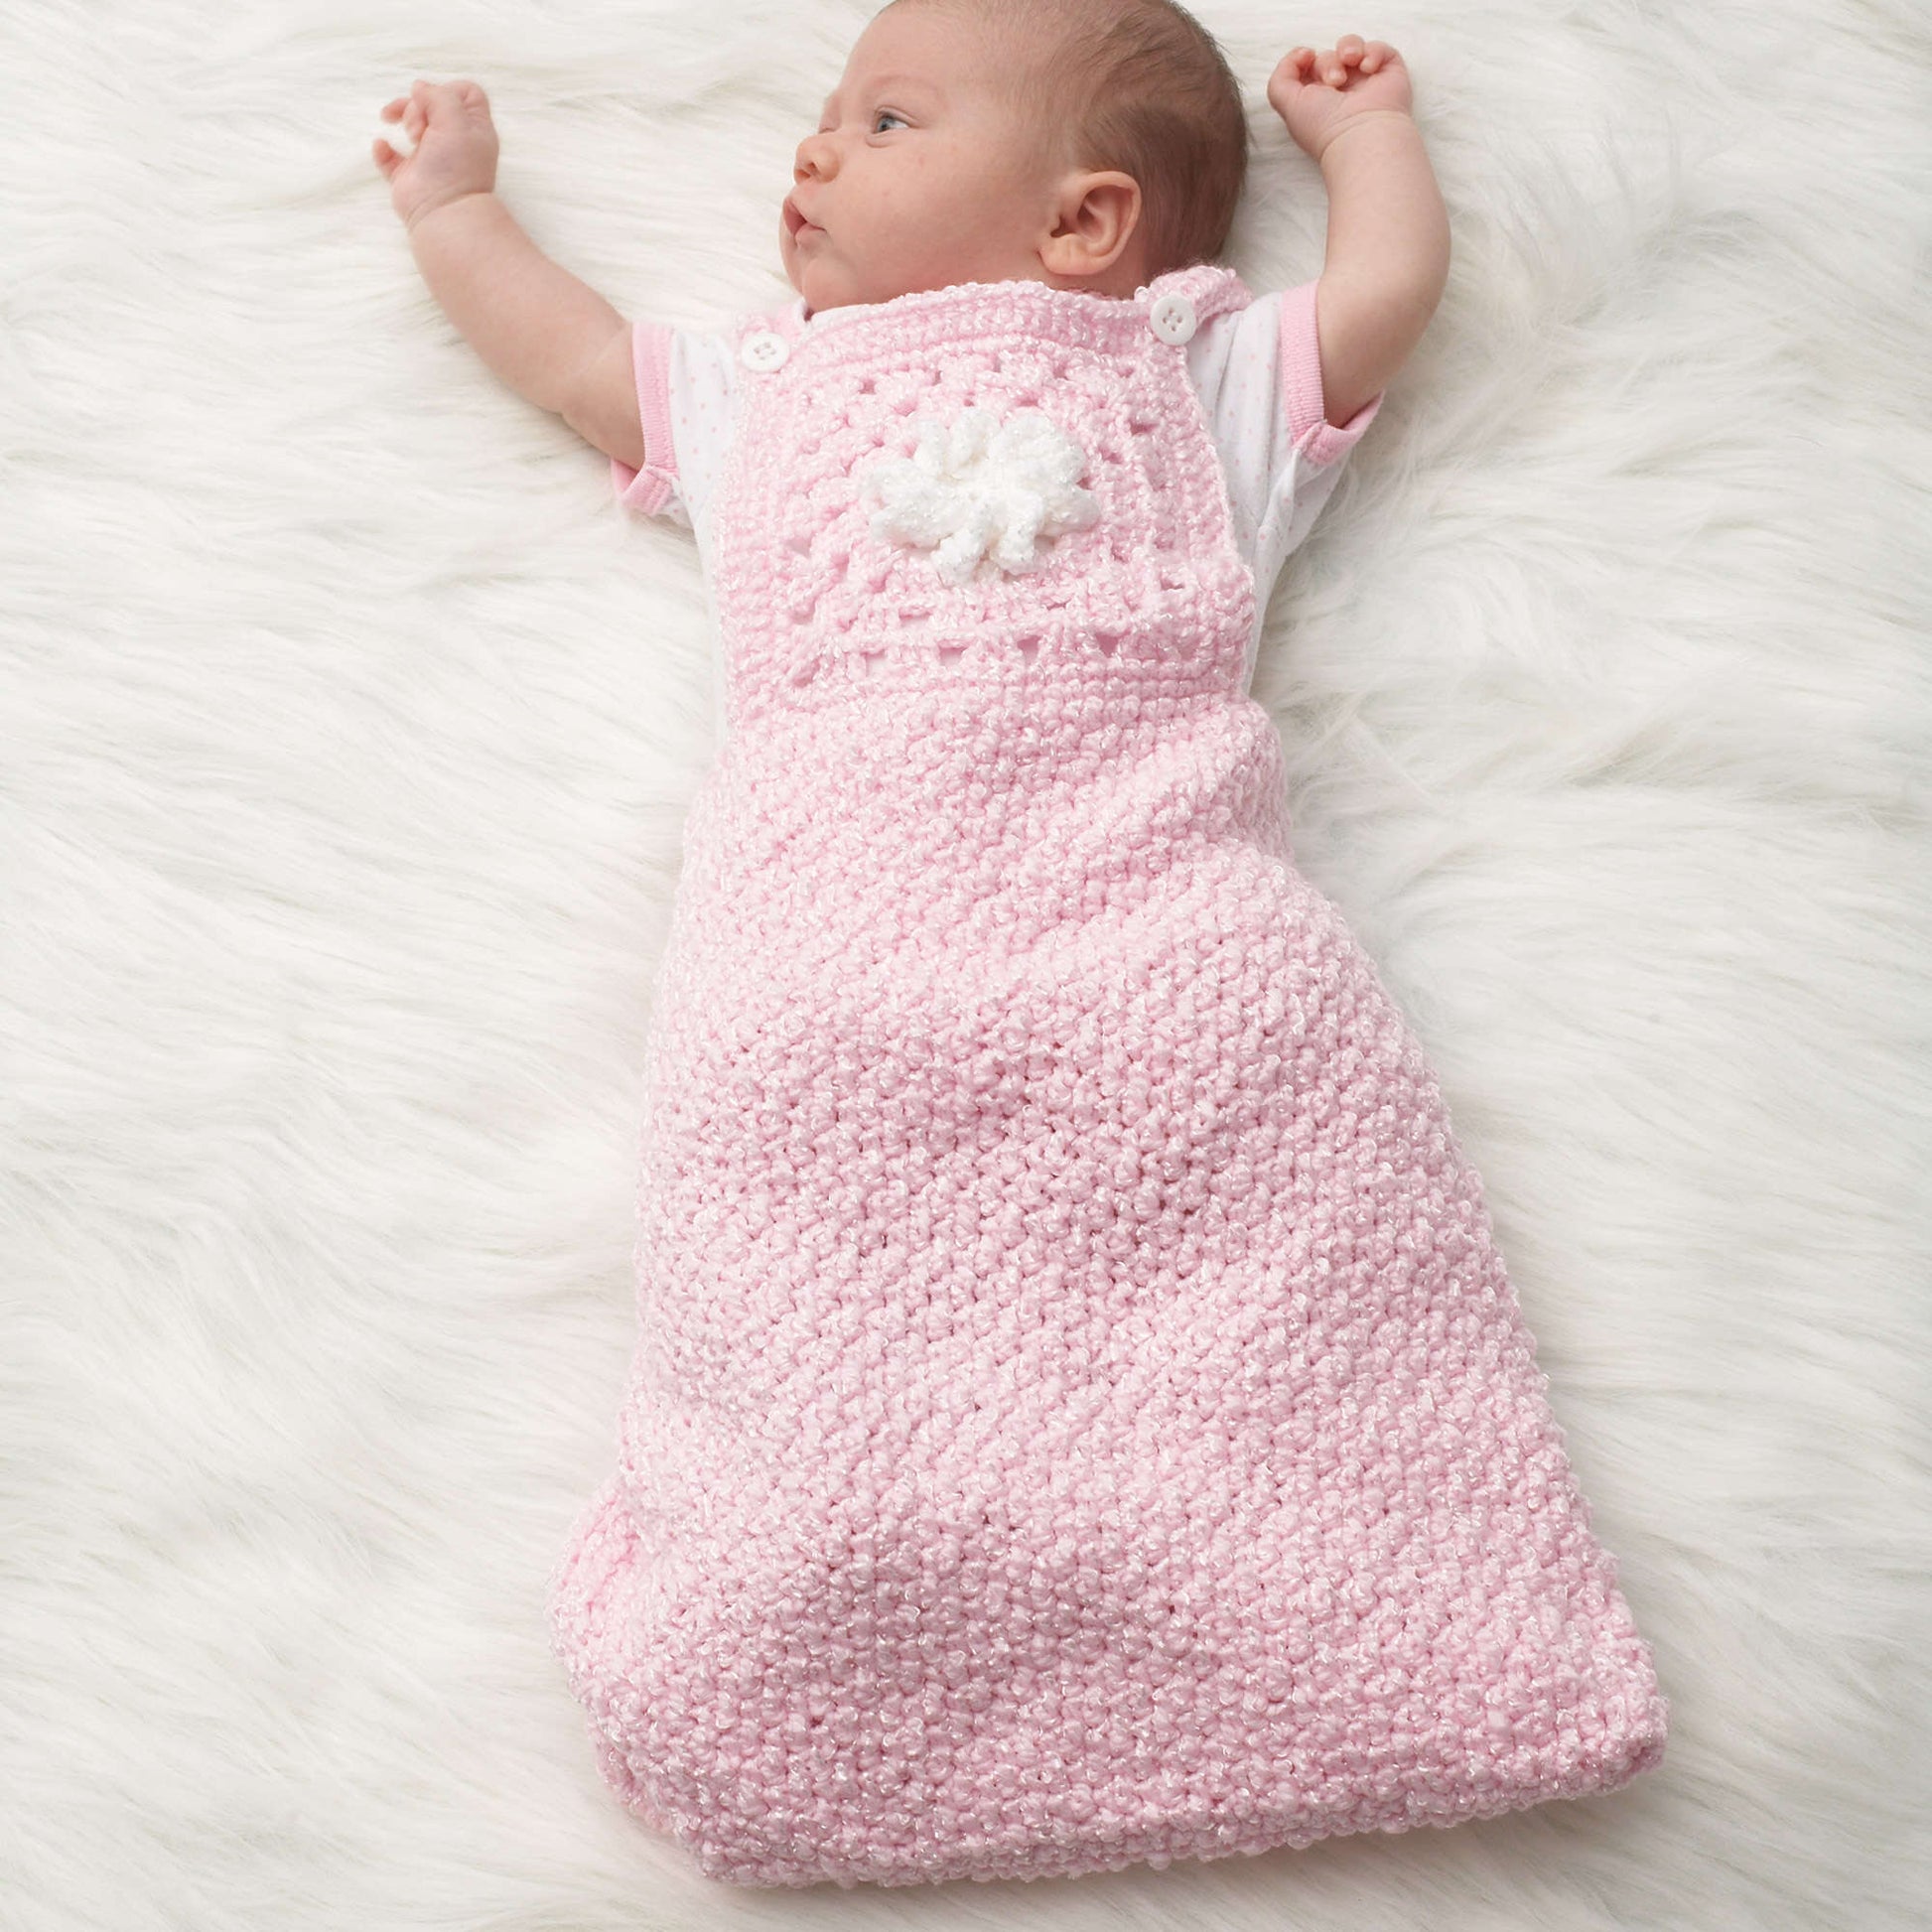 Bernat Granny Motif Crochet Baby Sack Crochet Blanket made in Bernat Baby Coordinates yarn